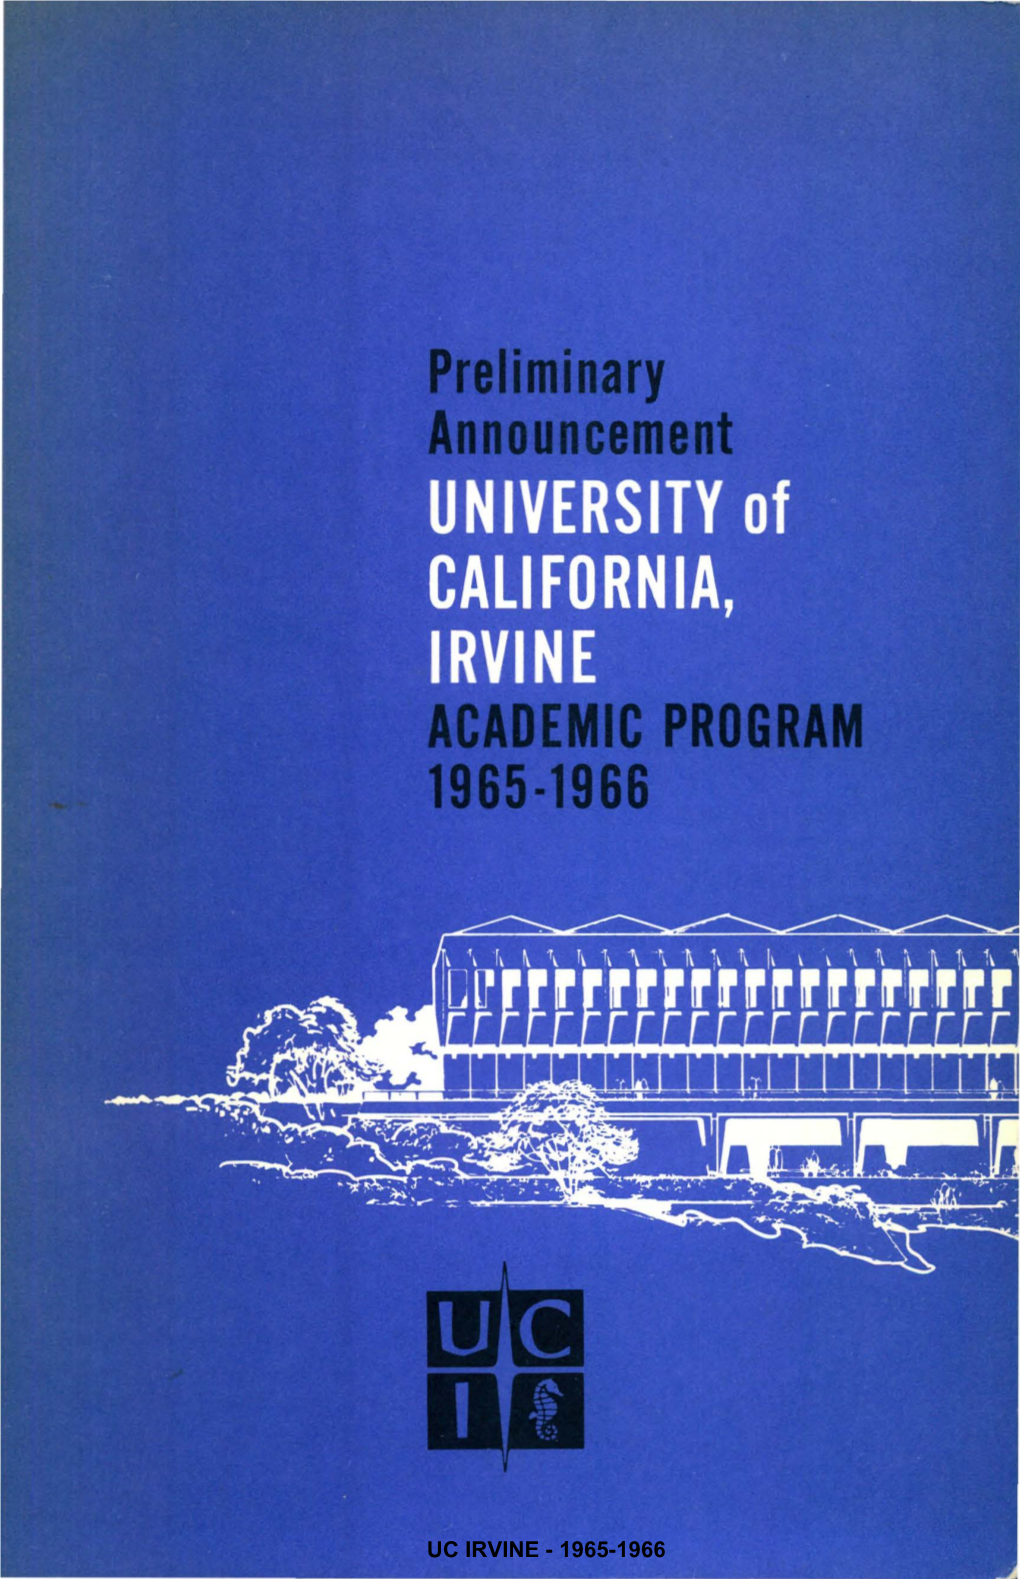 UC IRVINE - 1965-1966 Construction of Sociol Sciences-Humanities Unit